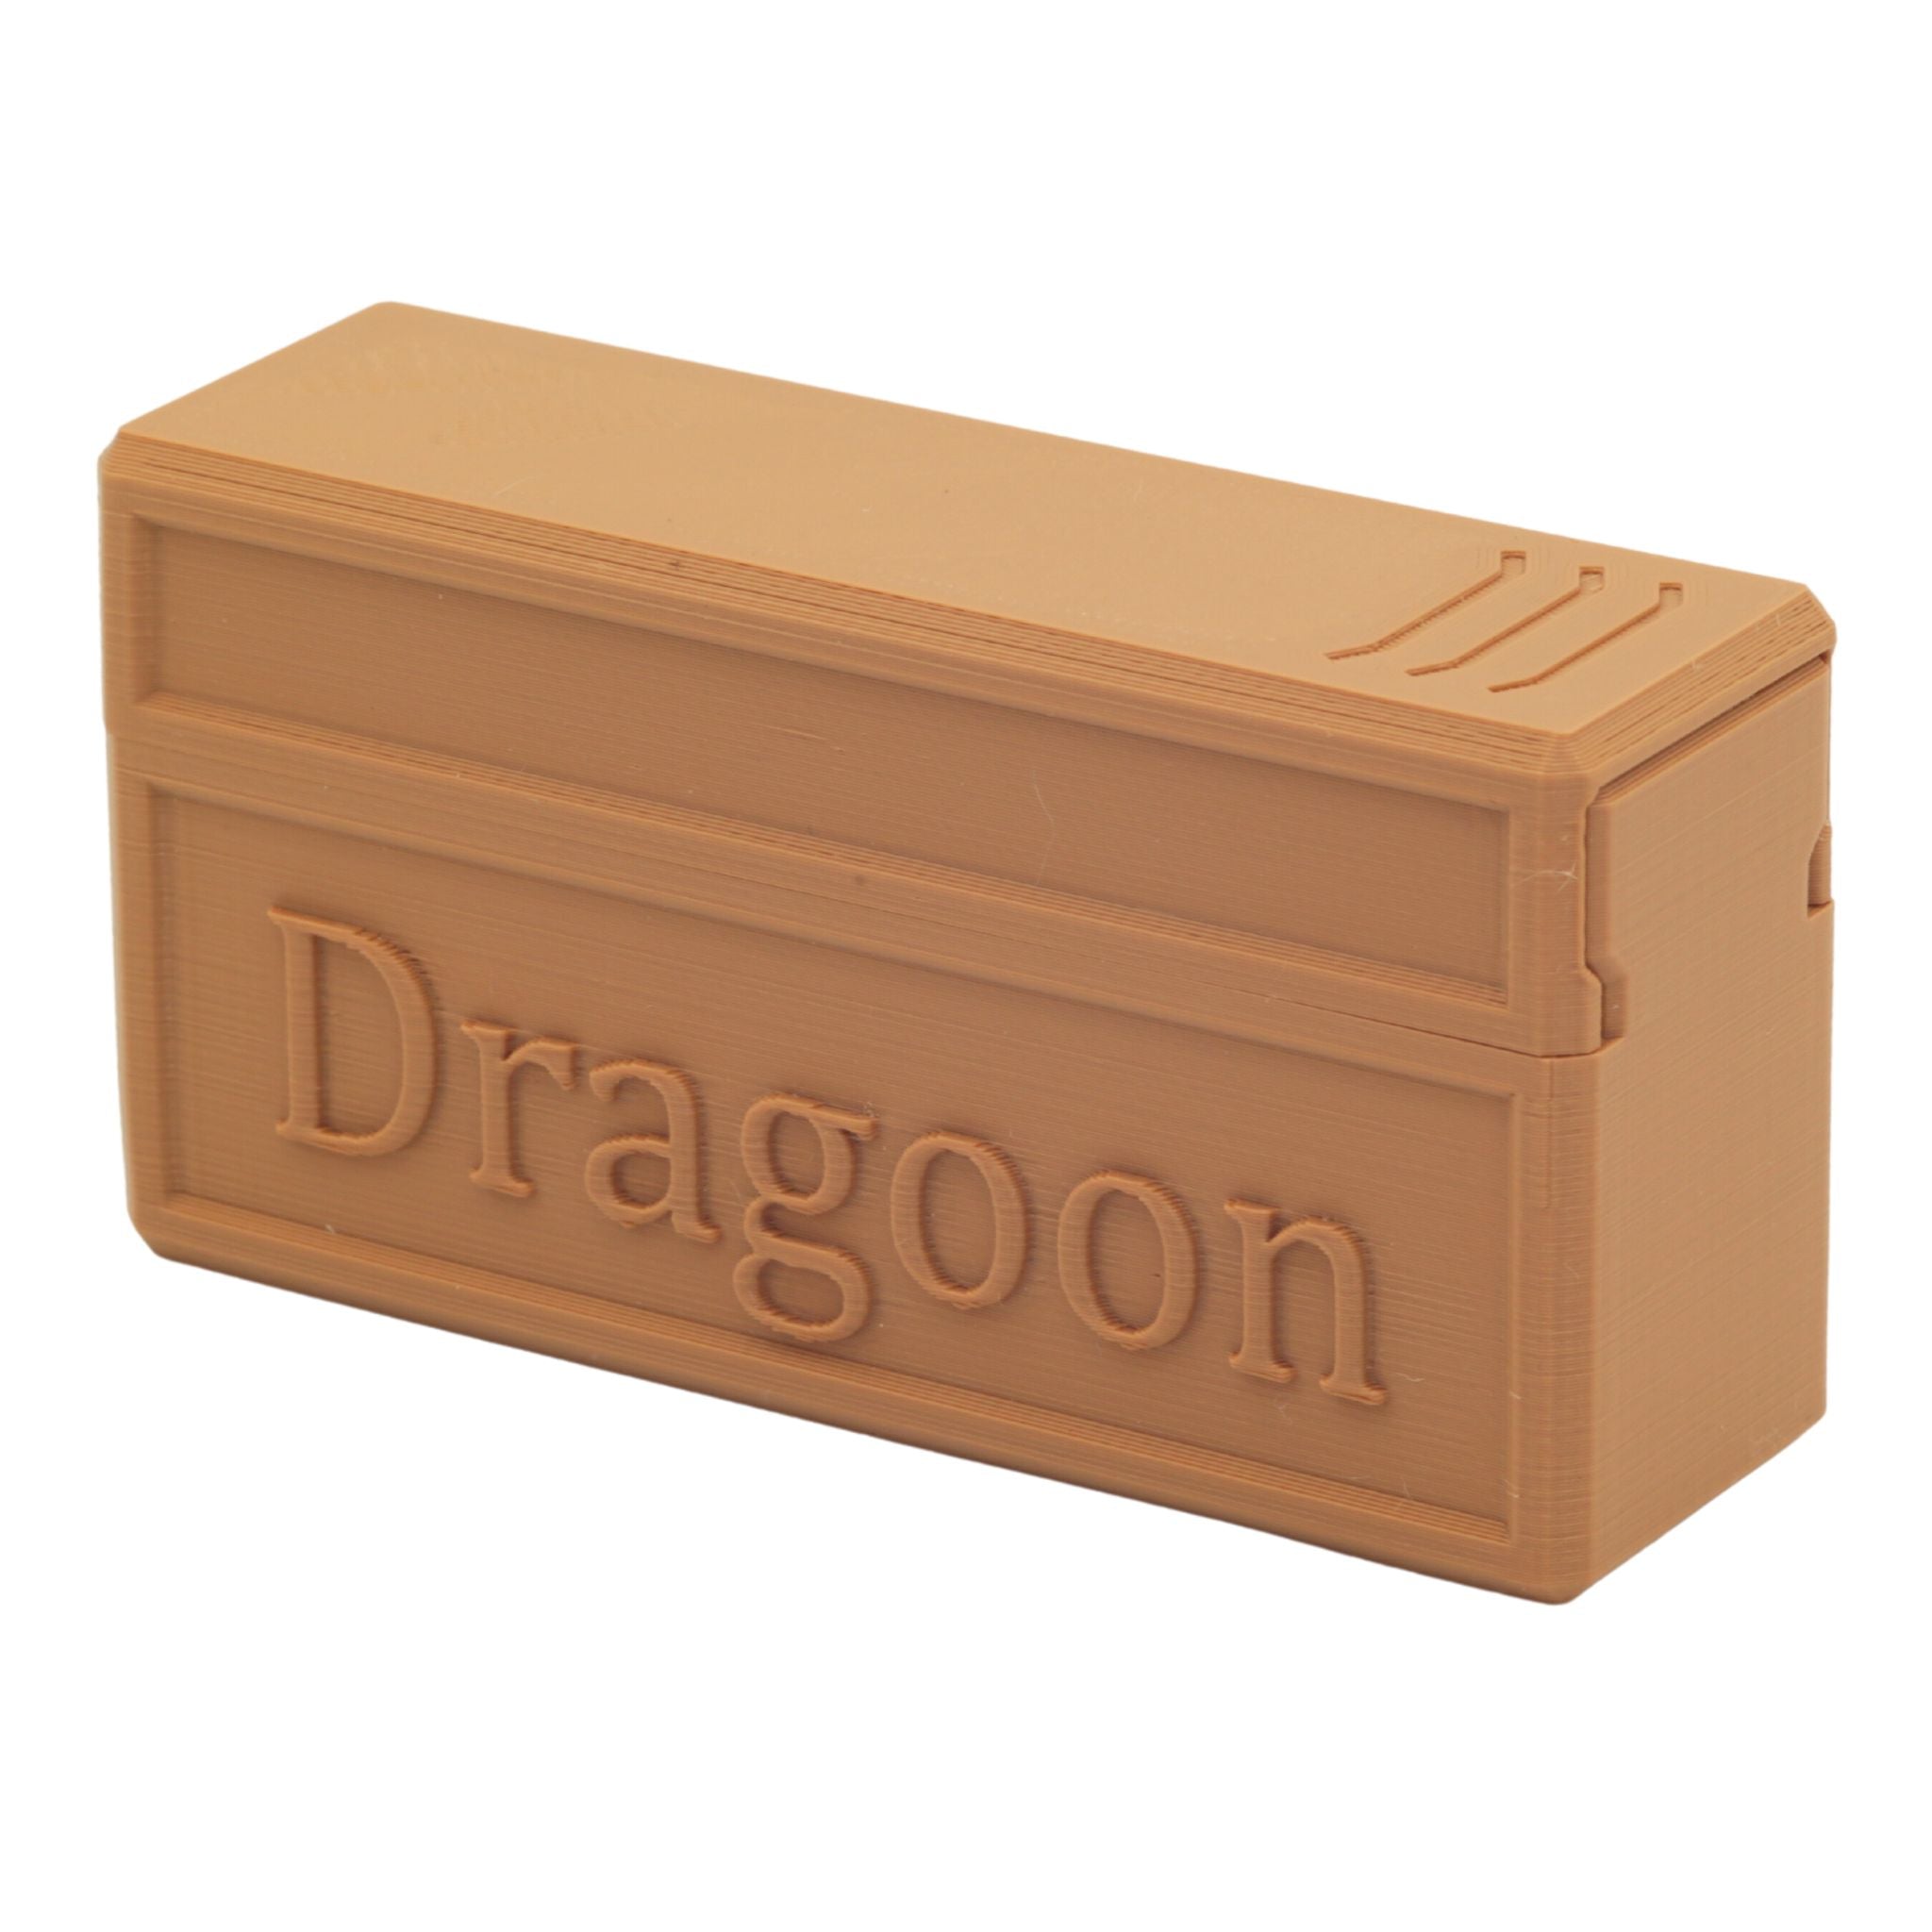 Dragoon Paper Cartridge Wallet Slide Top